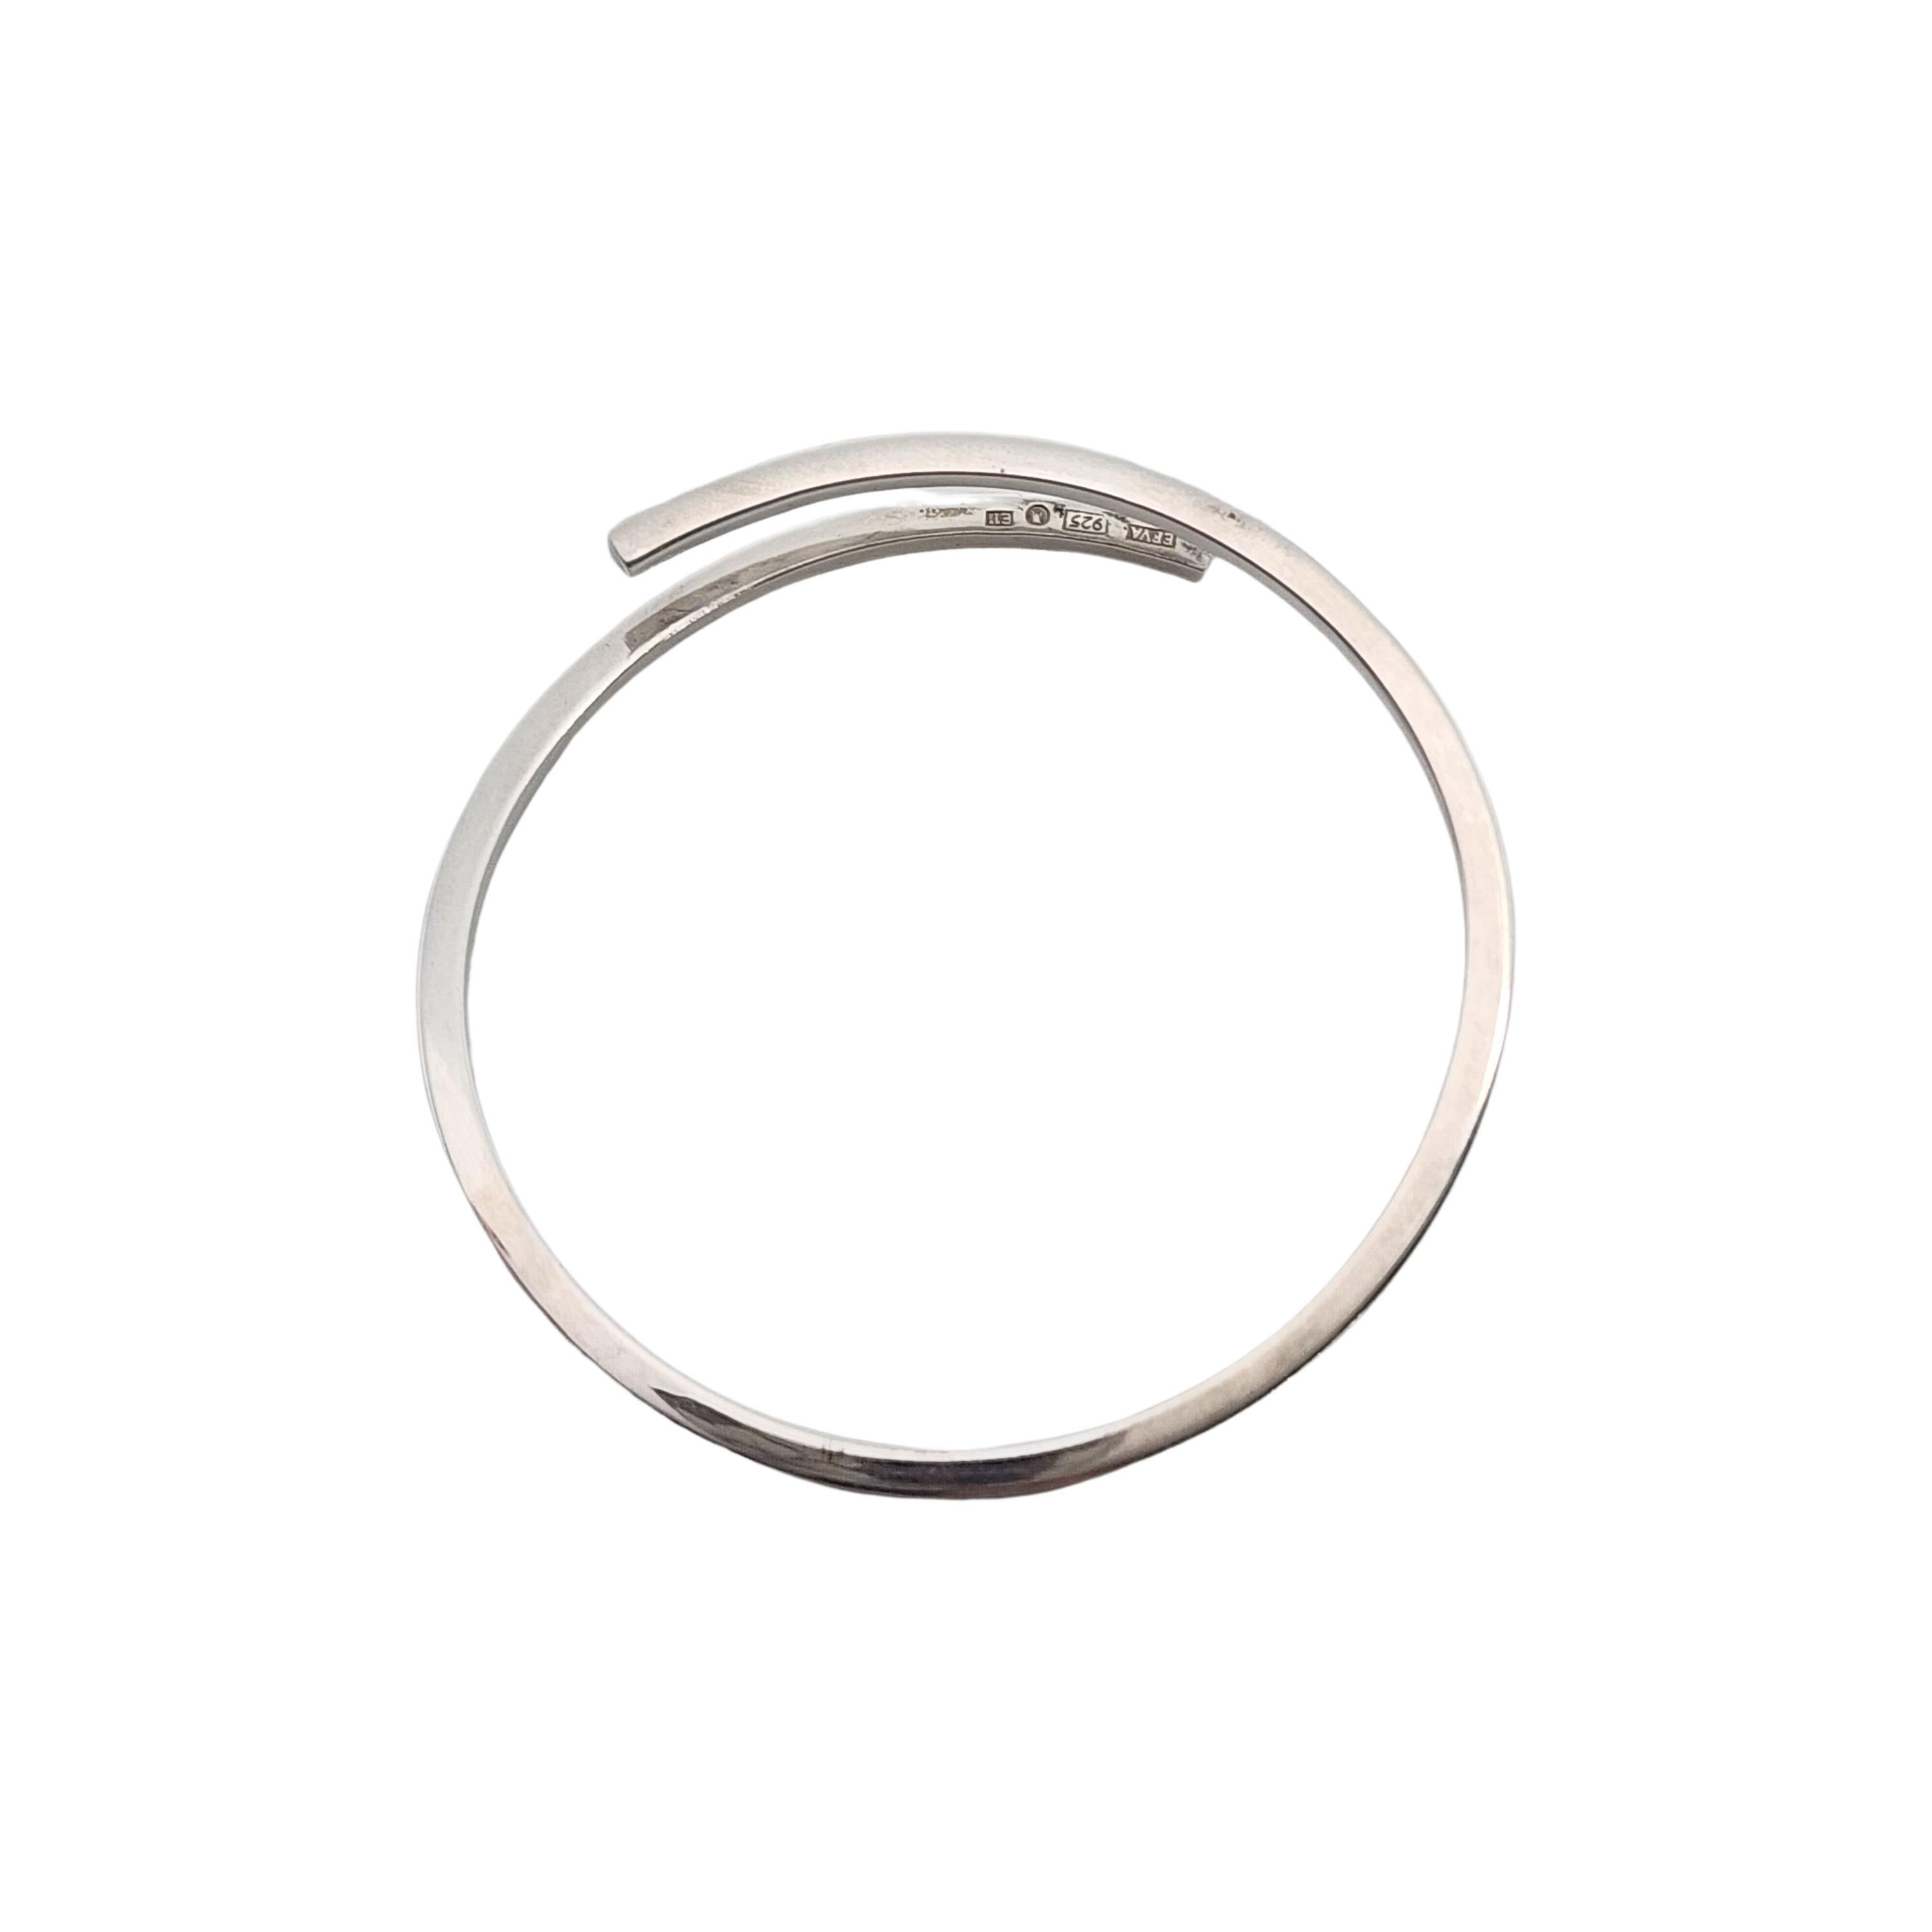 Efva Attling Stockholm Sterling Silver Twist Around Cuff Bracelet #16439 For Sale 1